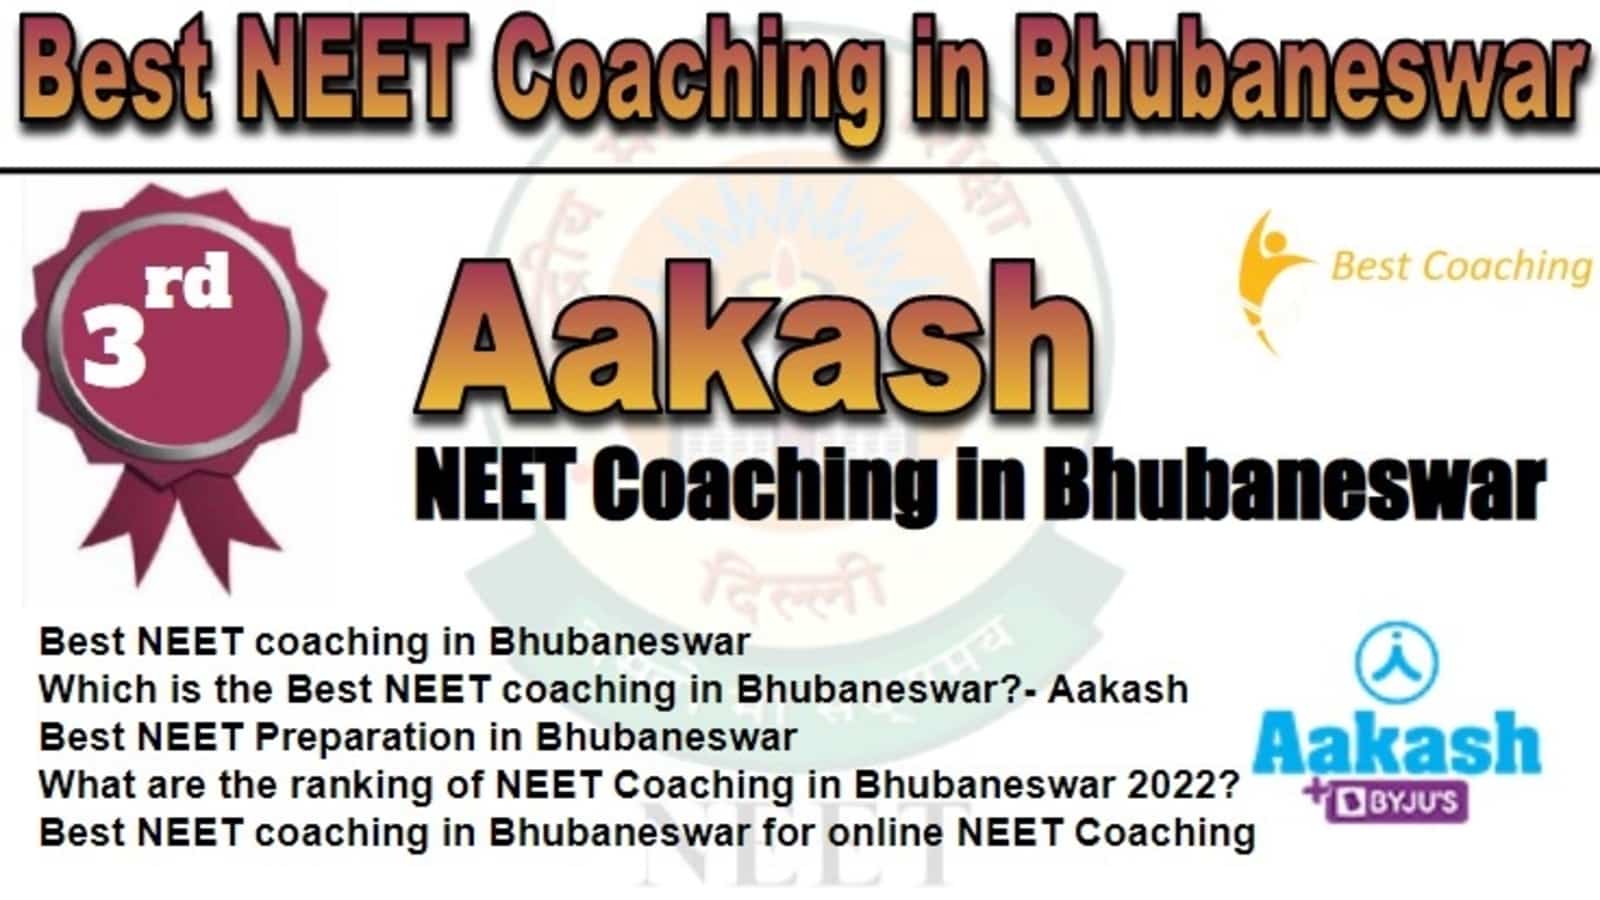 Rank 3 Best NEET Coaching in Bhubaneswar